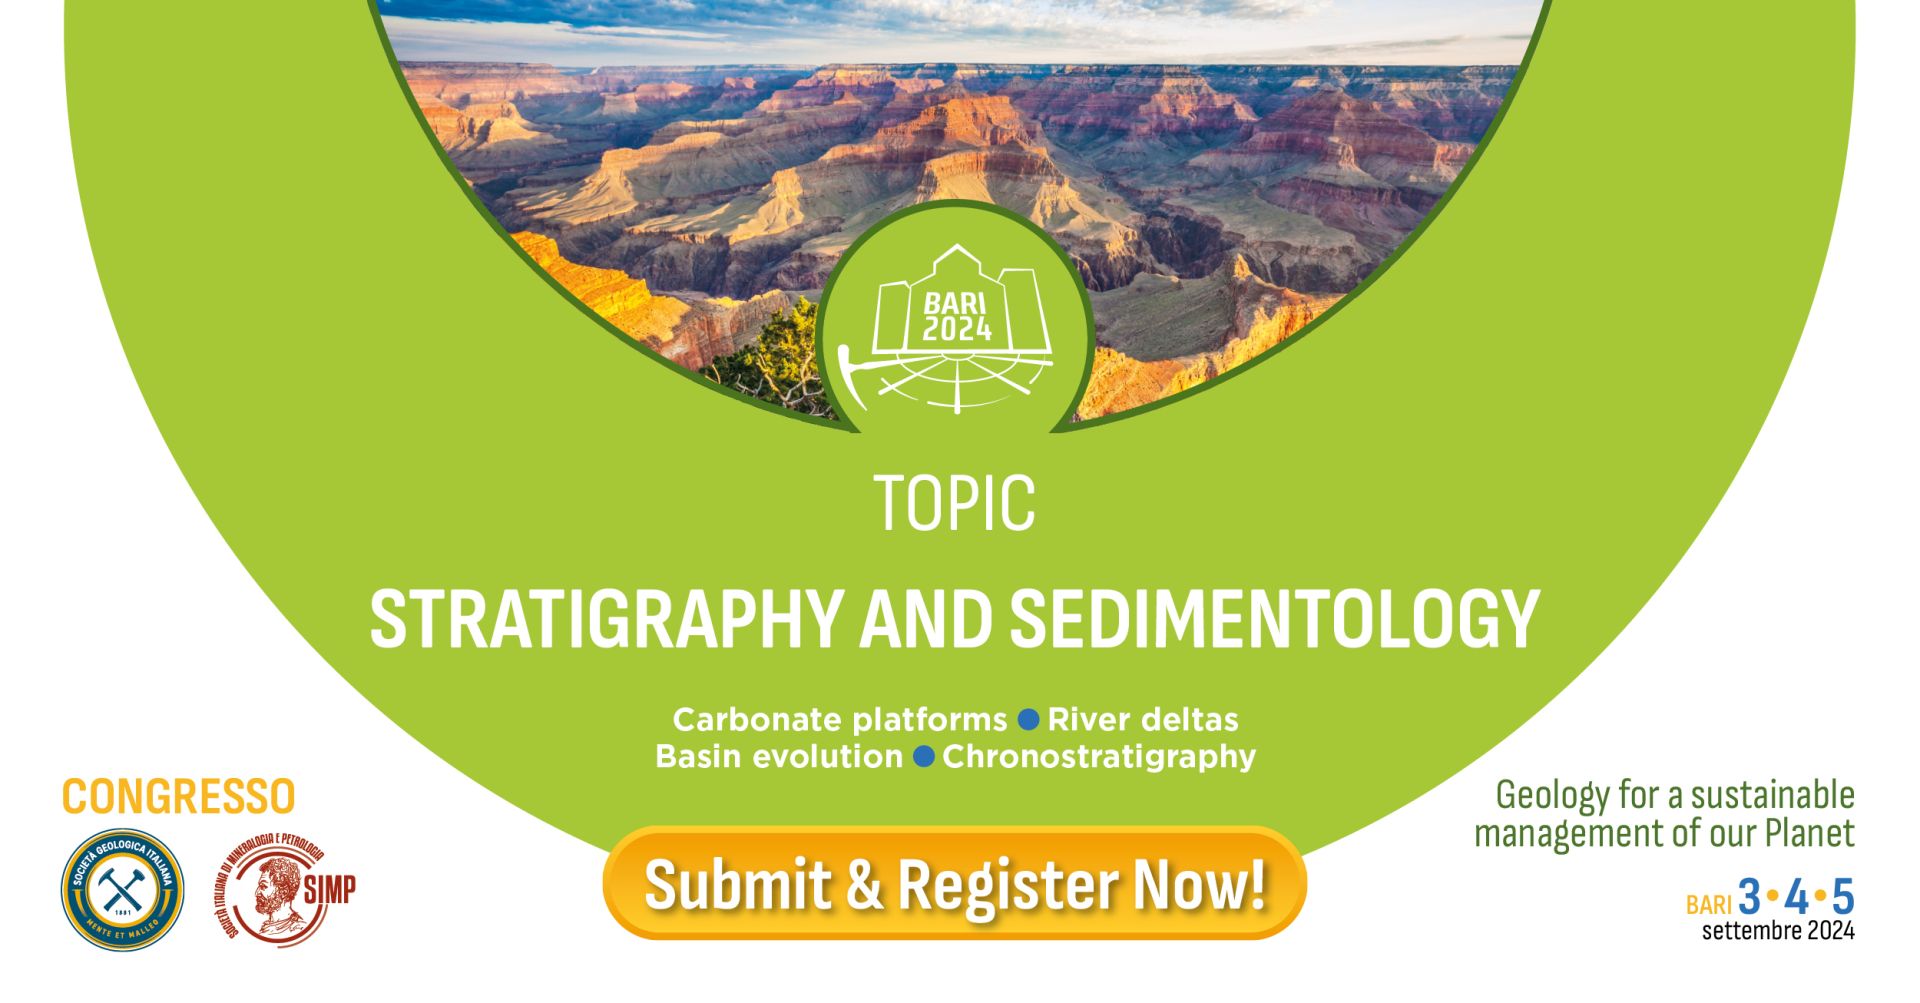 Stratigraphy and sedimentology